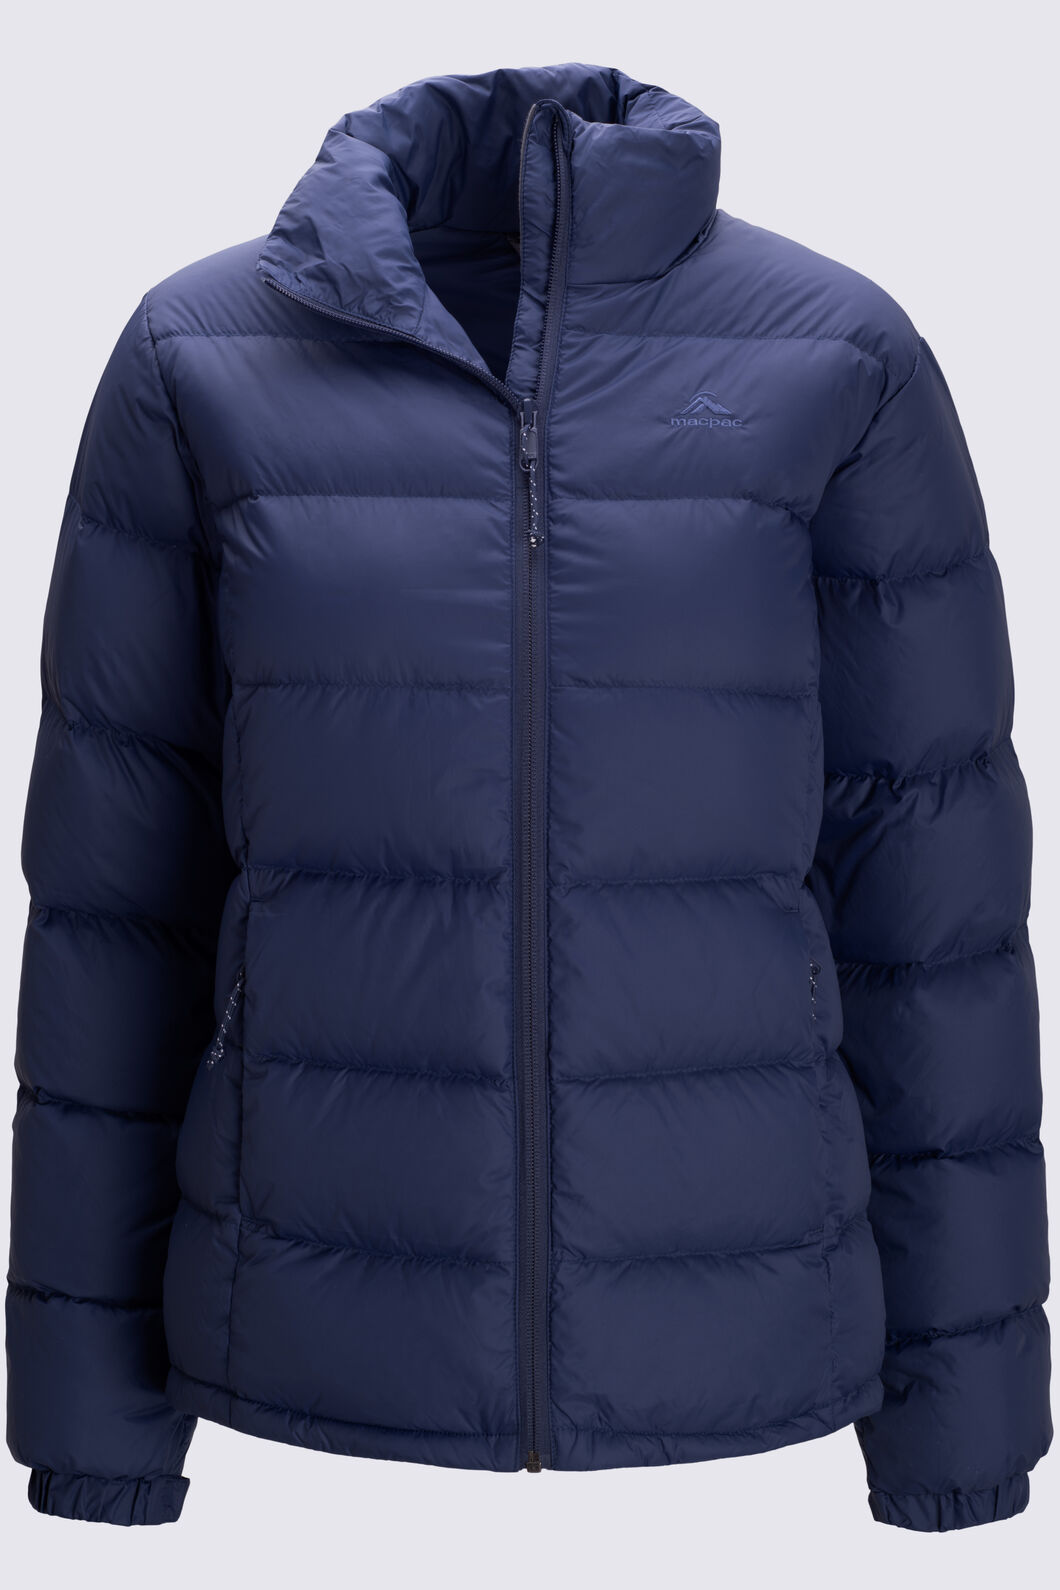 Macpac Women's Mountain Fleece Jacket